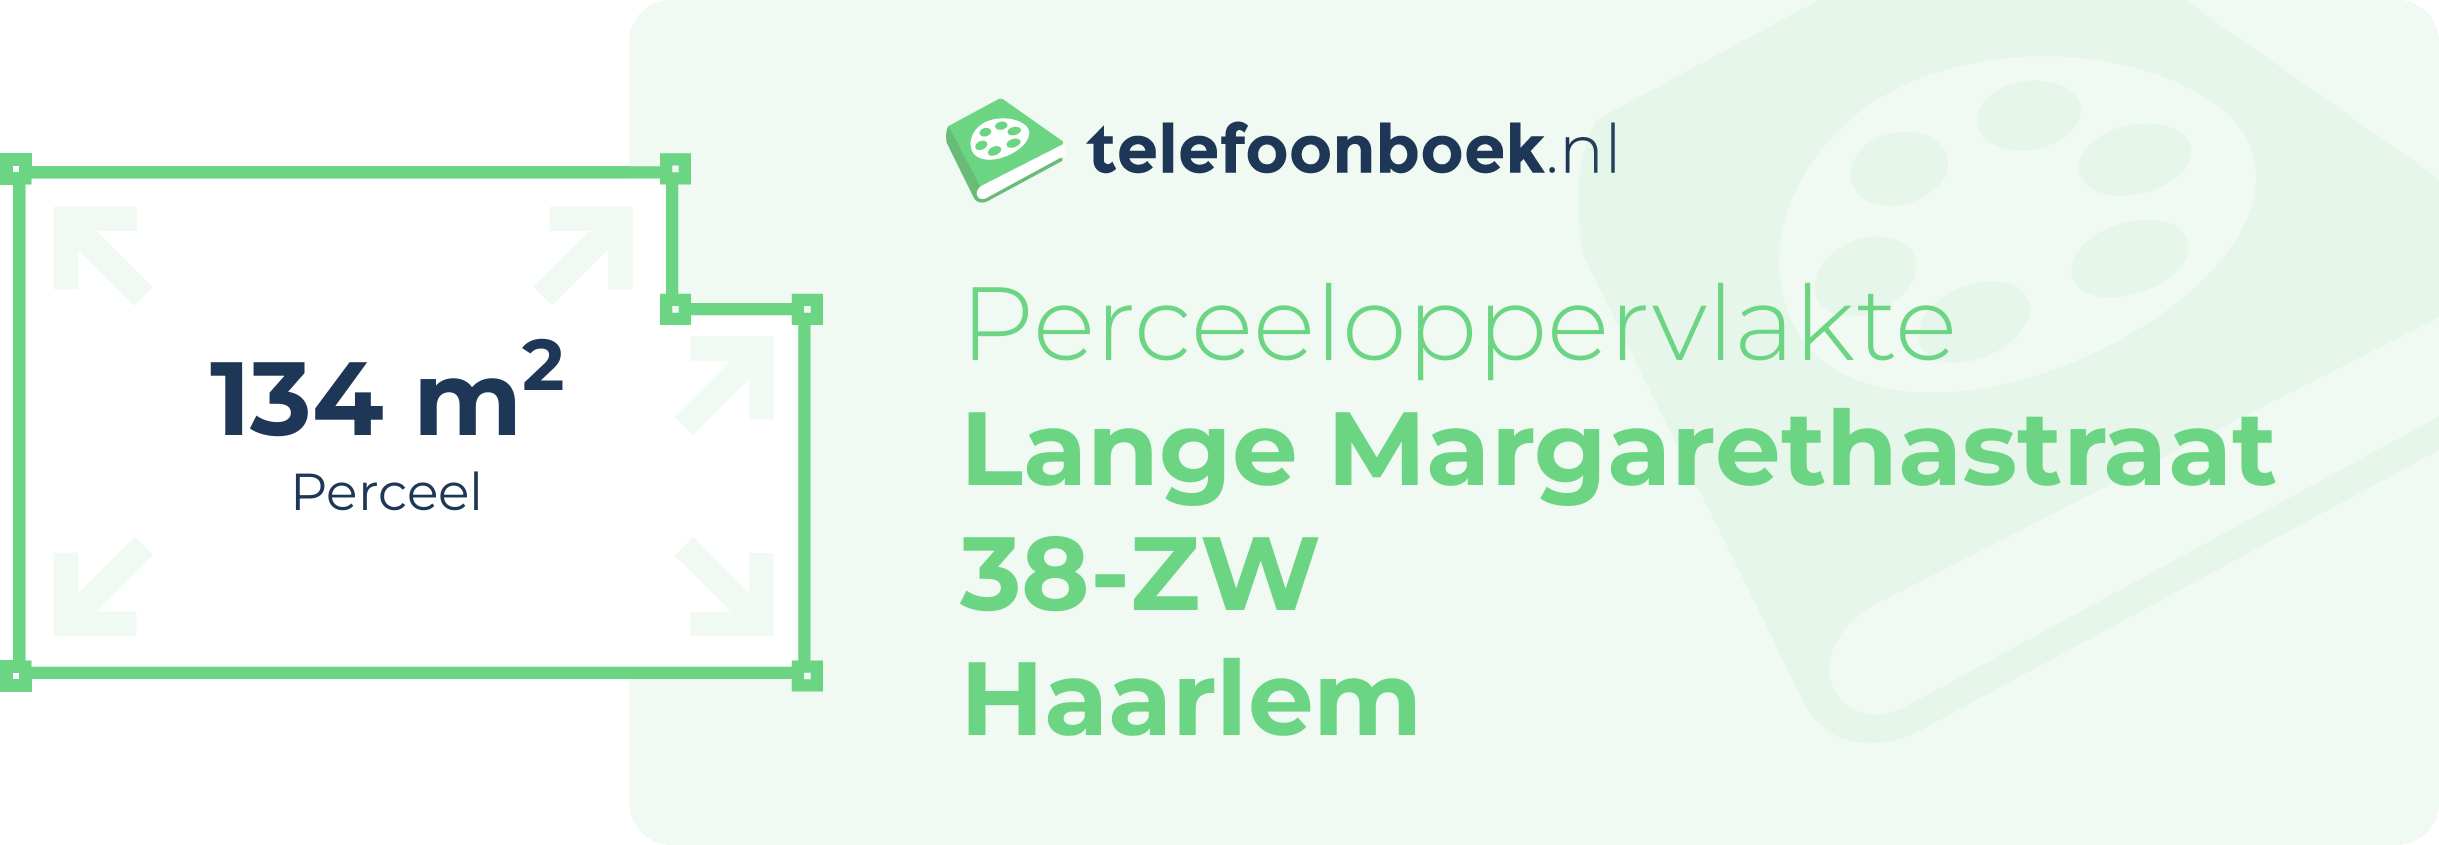 Perceeloppervlakte Lange Margarethastraat 38-ZW Haarlem